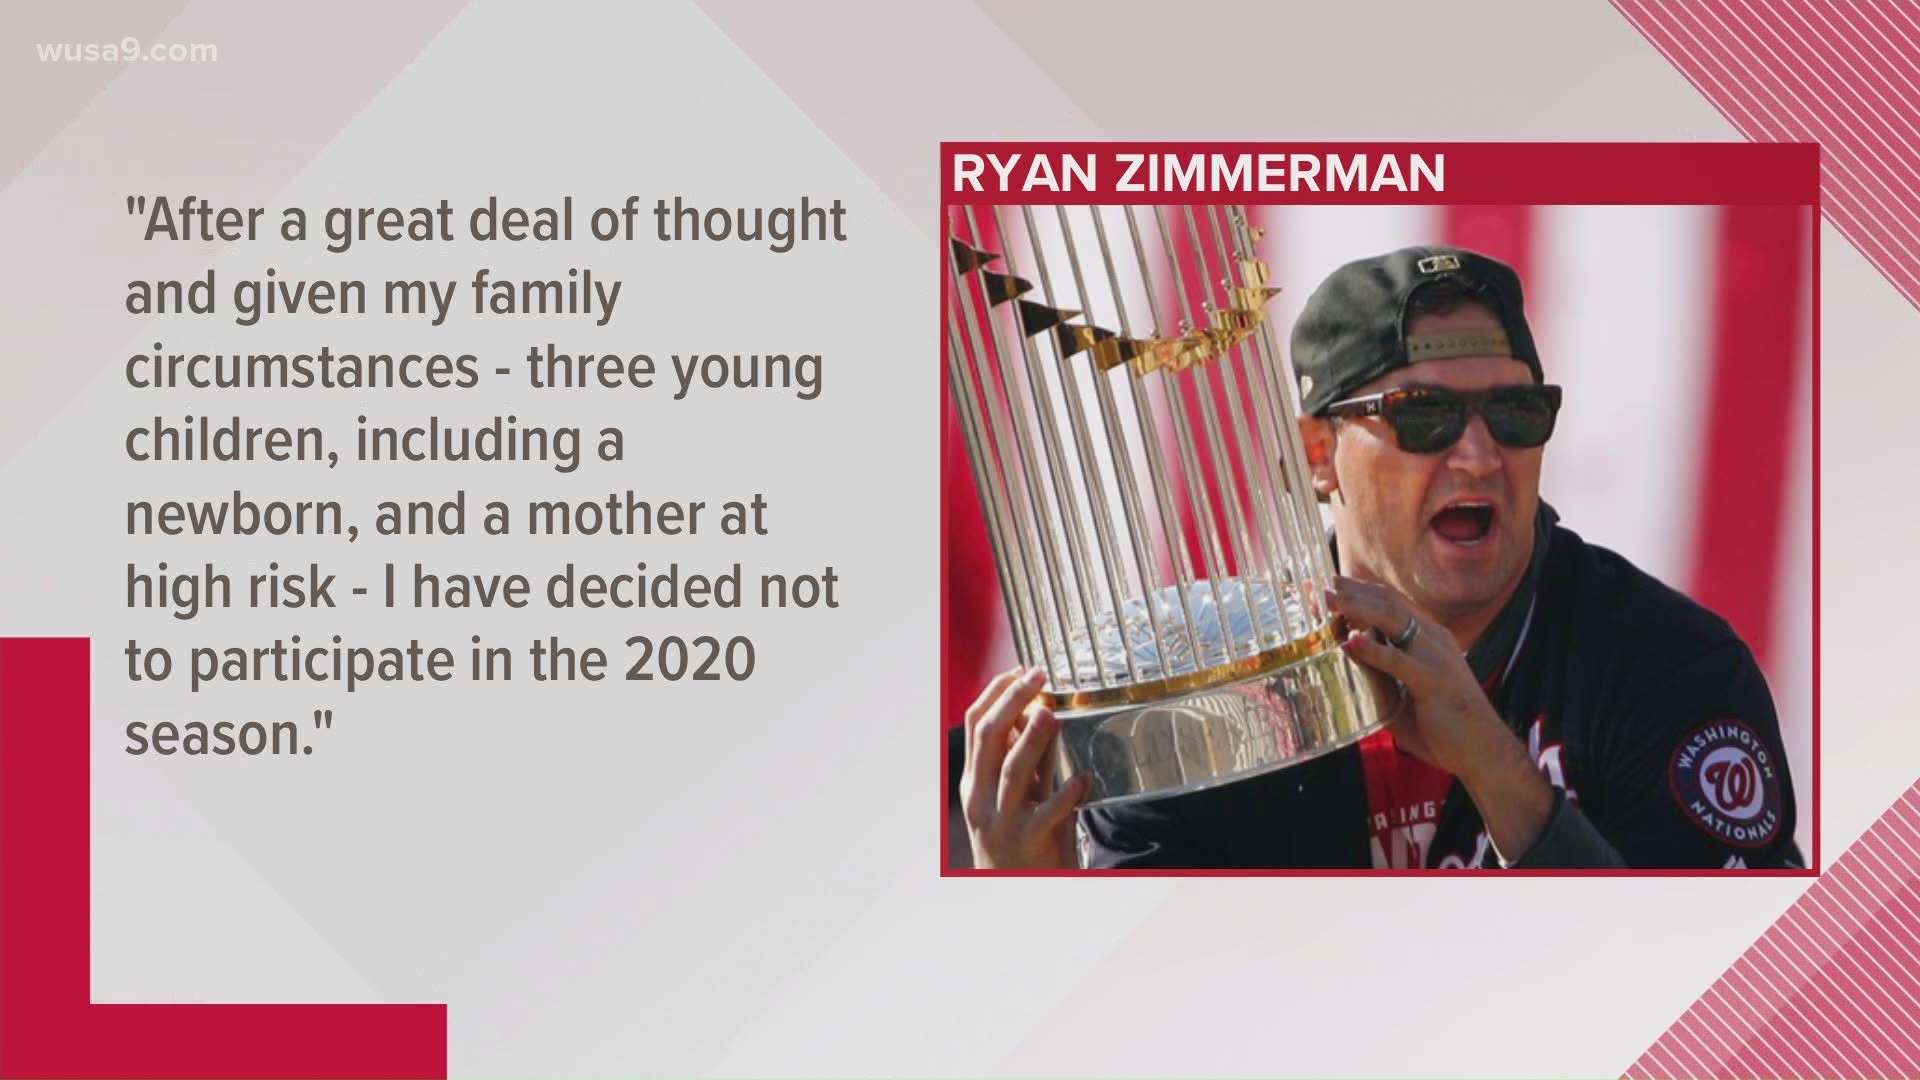 National's Ryan Zimmerman skips 2020 MLB season amid coronavirus